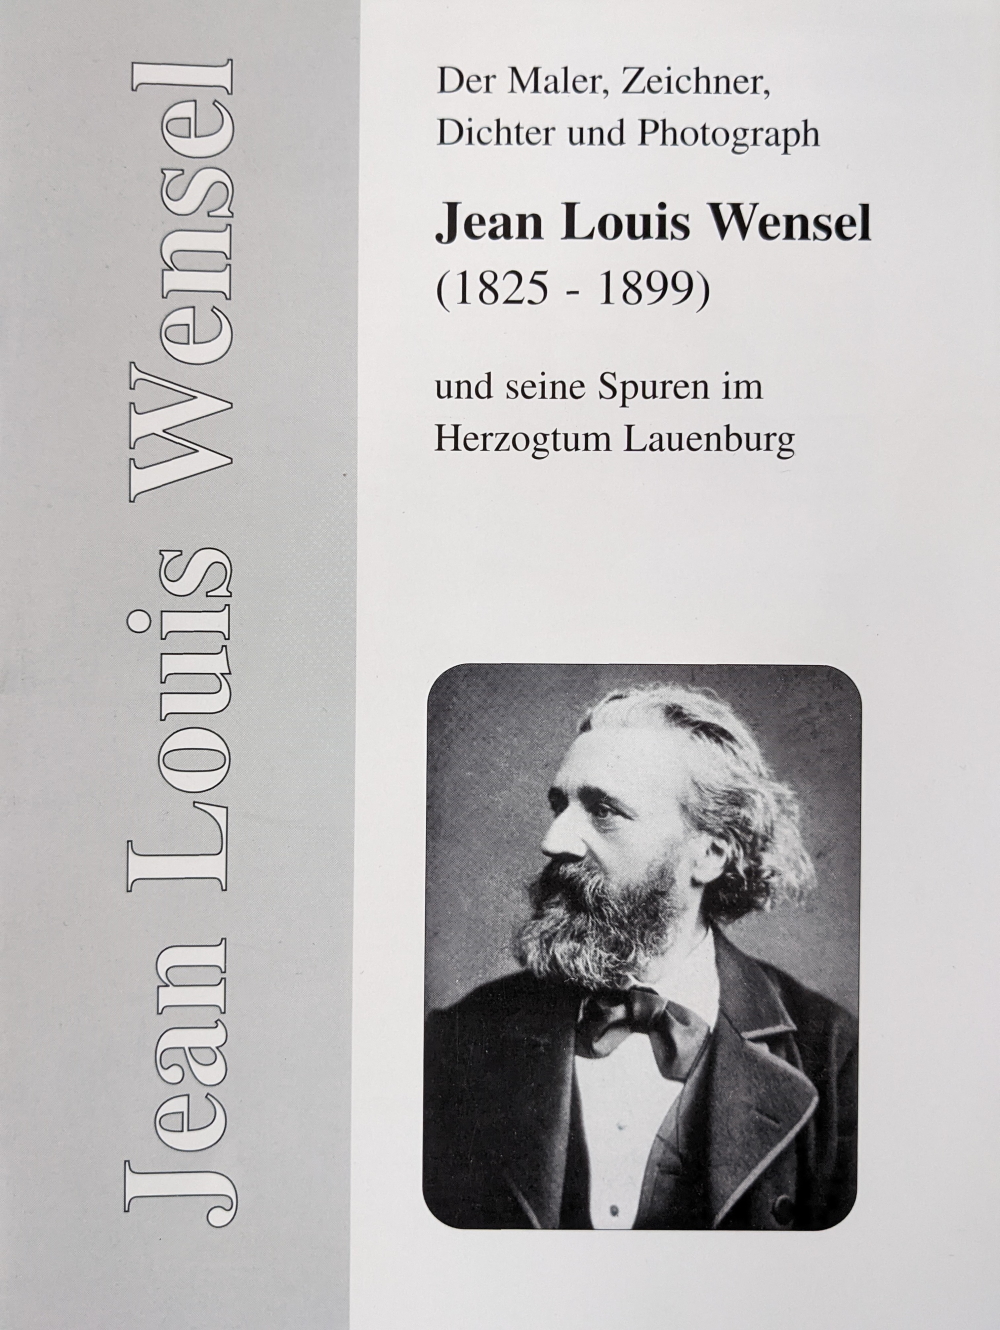 Cover, Katalog, Jean Louis Wensel.